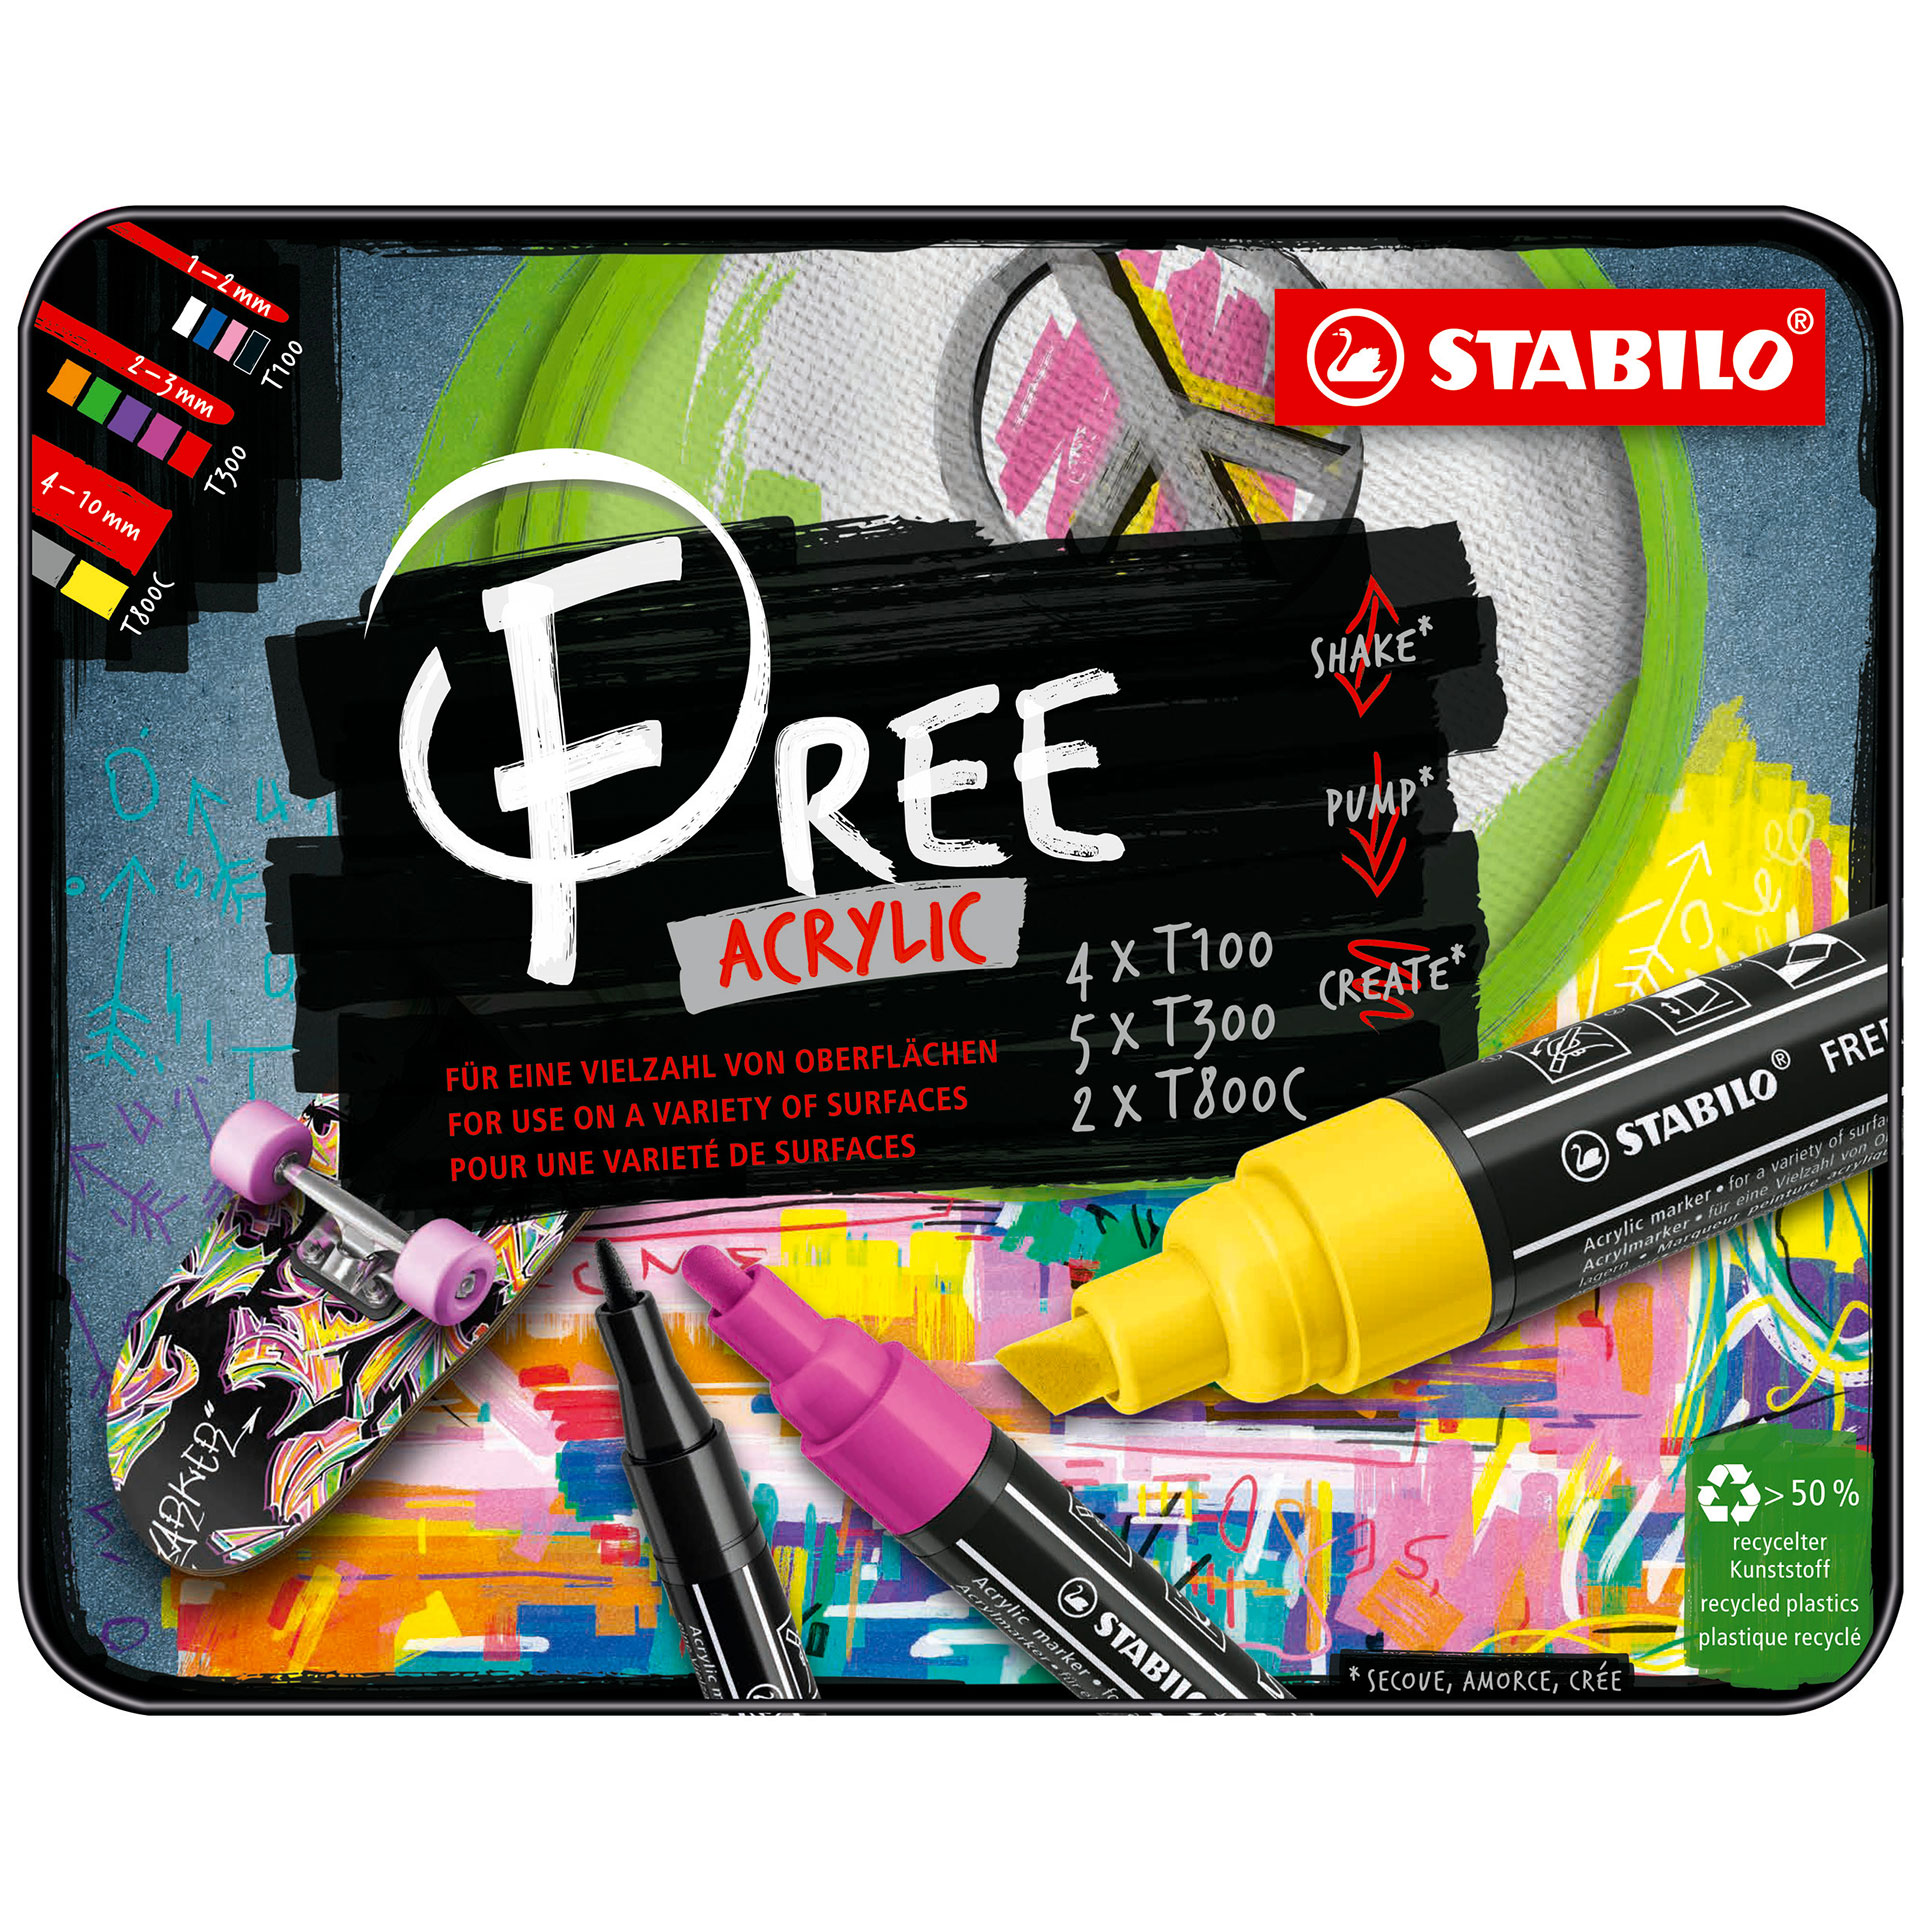 STABILO FREE Acrylic Starter Set - Pack da 11 - 4x T100, 5x T300, 2x T800C - Col, , large